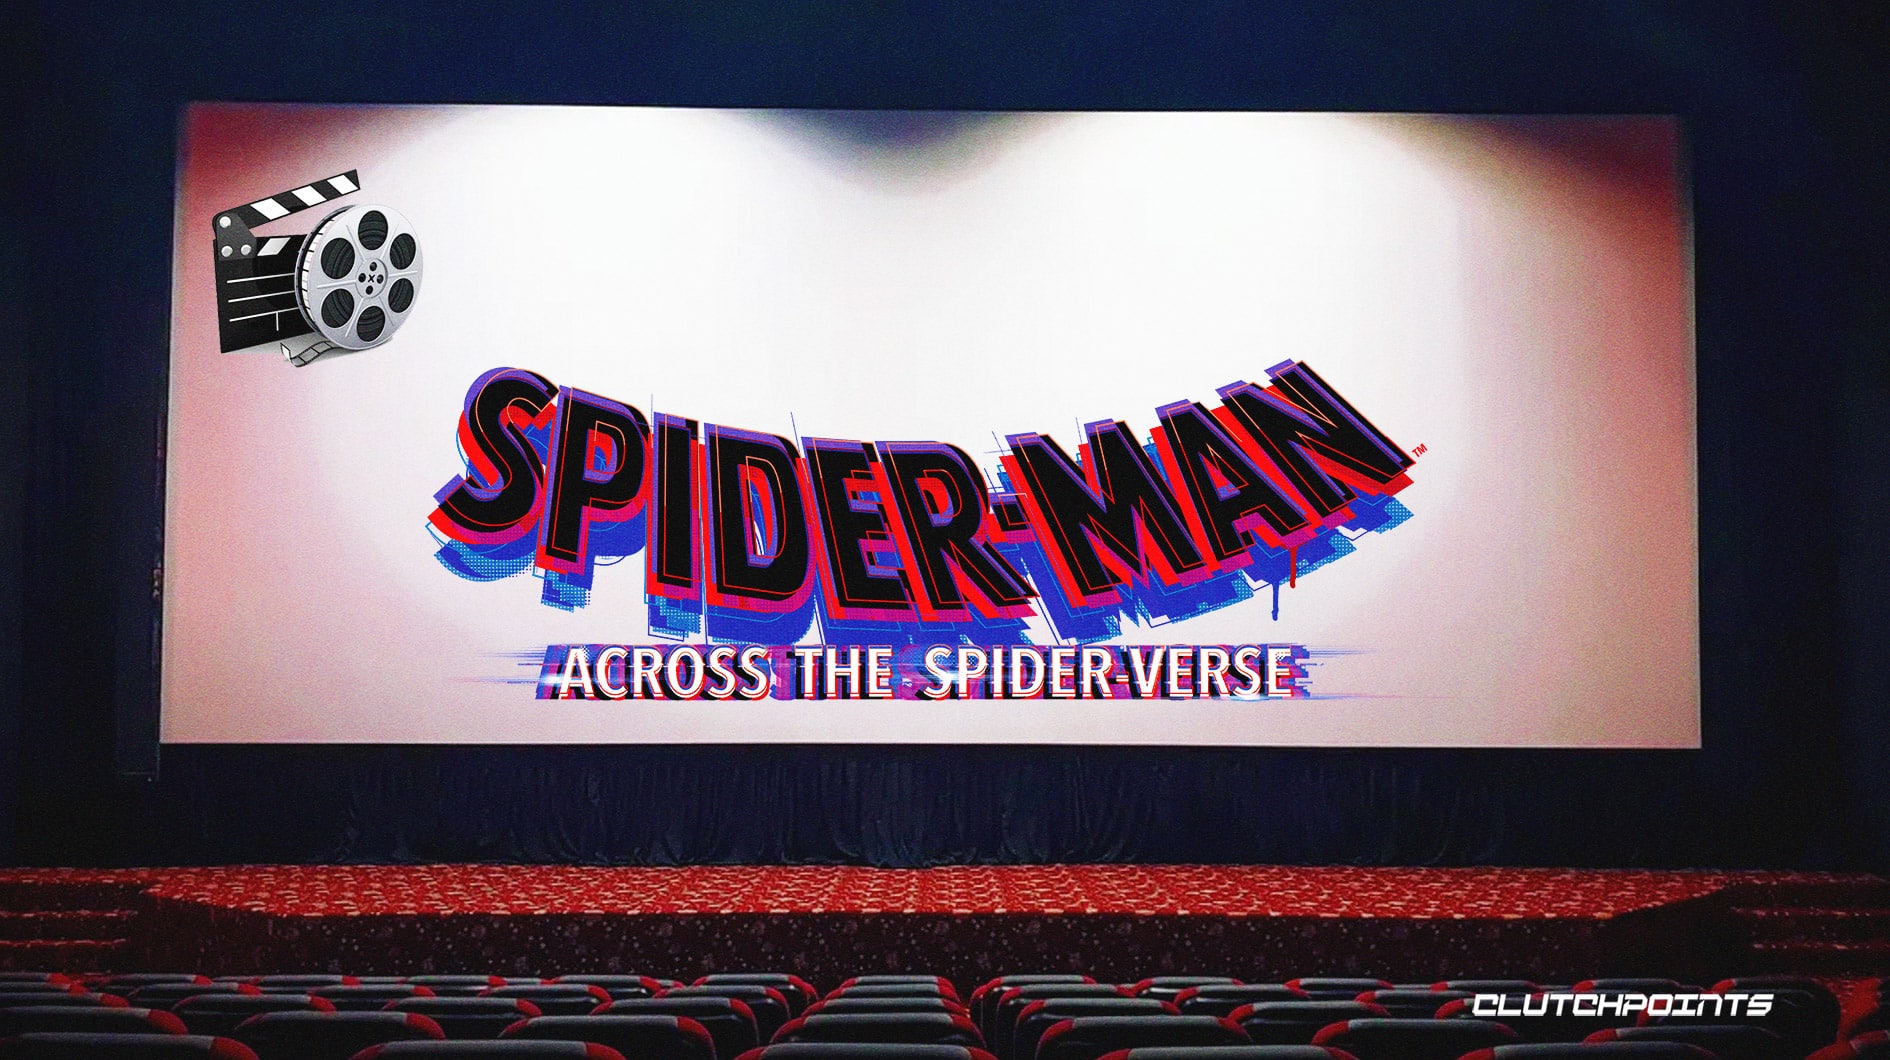 Spider-Man: Across the Spider-Verse (PG) - Wyllyotts Theatre